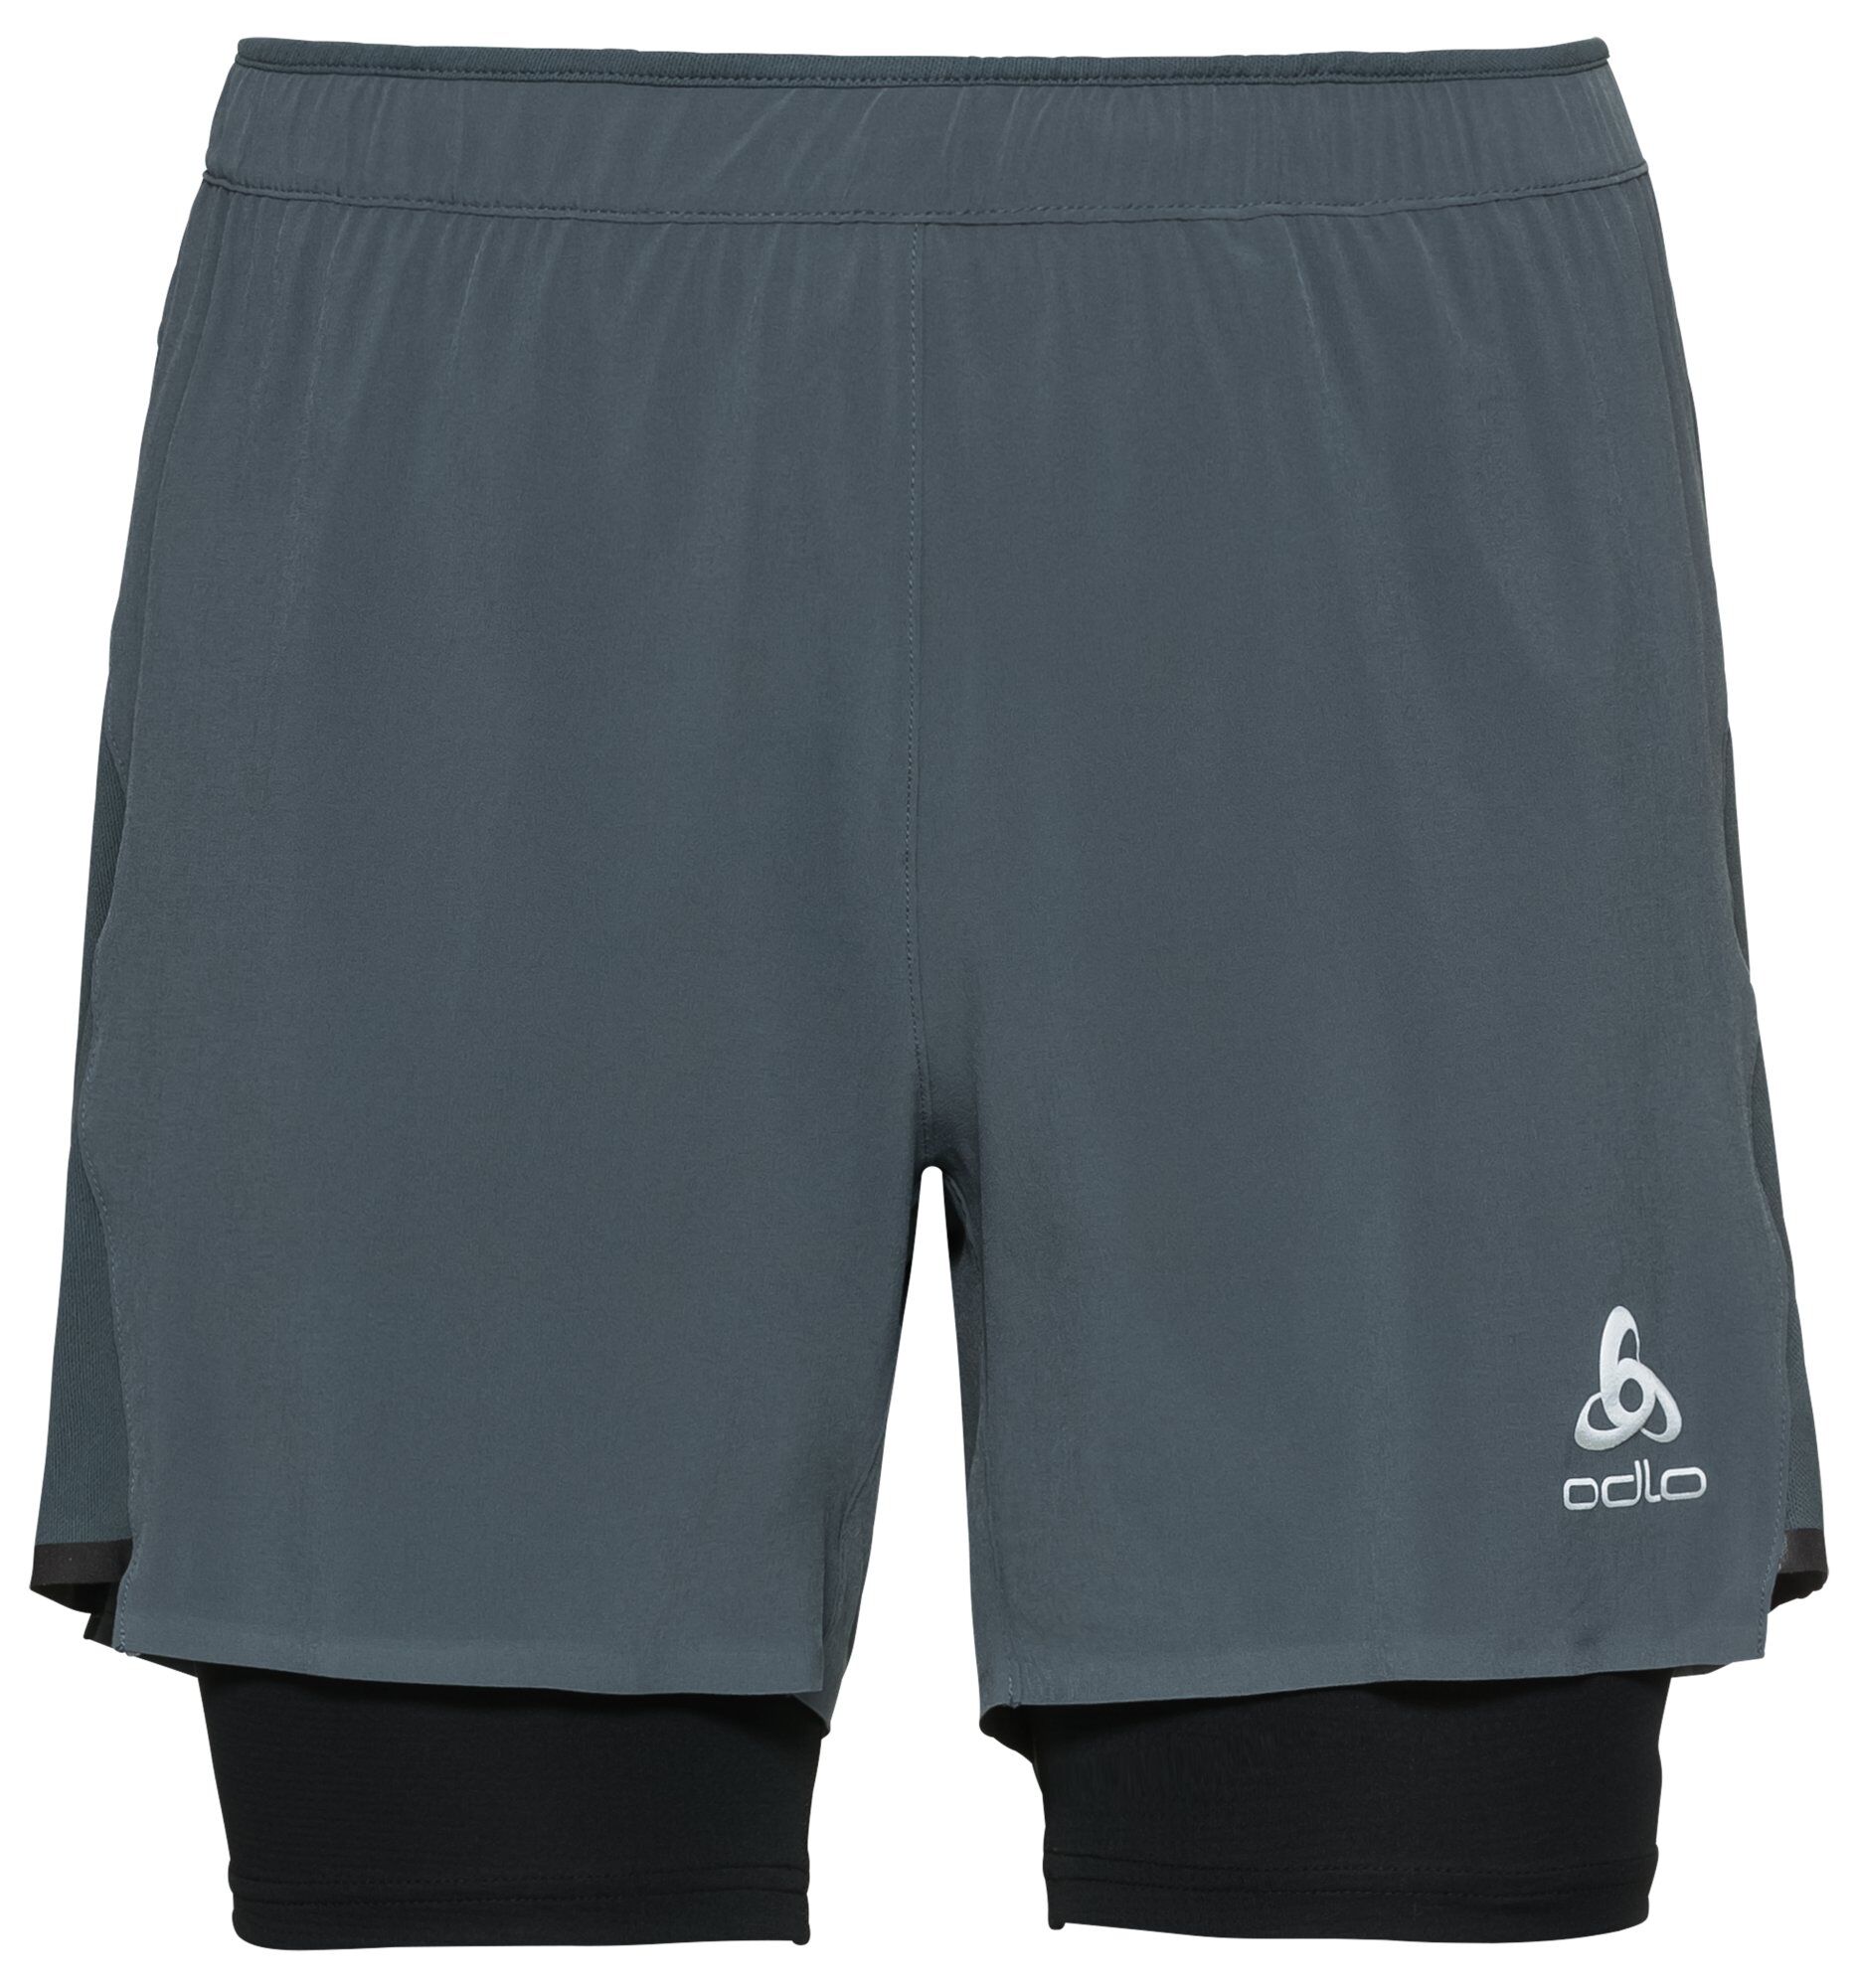 Odlo - Zeroweight Ceramicool Pro - Running shorts - Men's